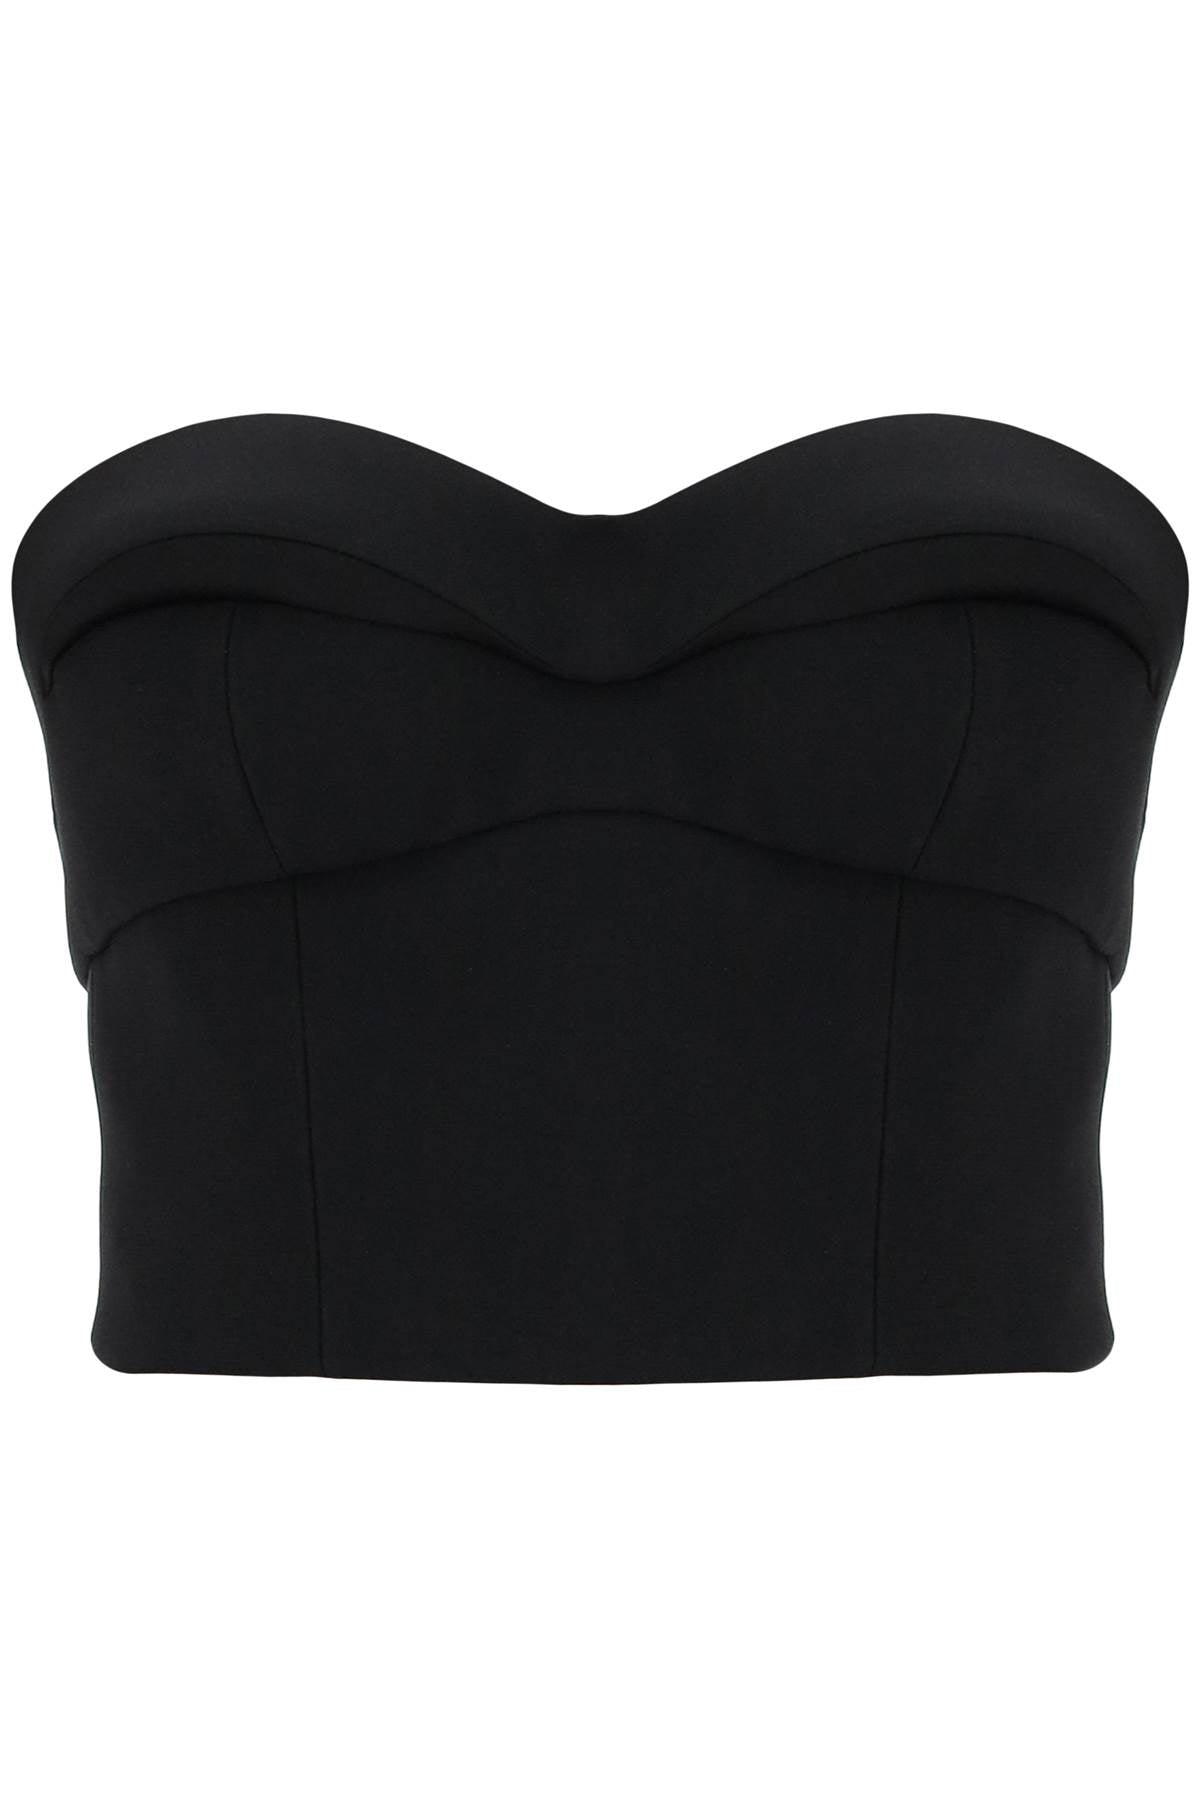 Versace 帶襯墊罩杯緊身胸衣上衣 1014822 1A10346 黑色